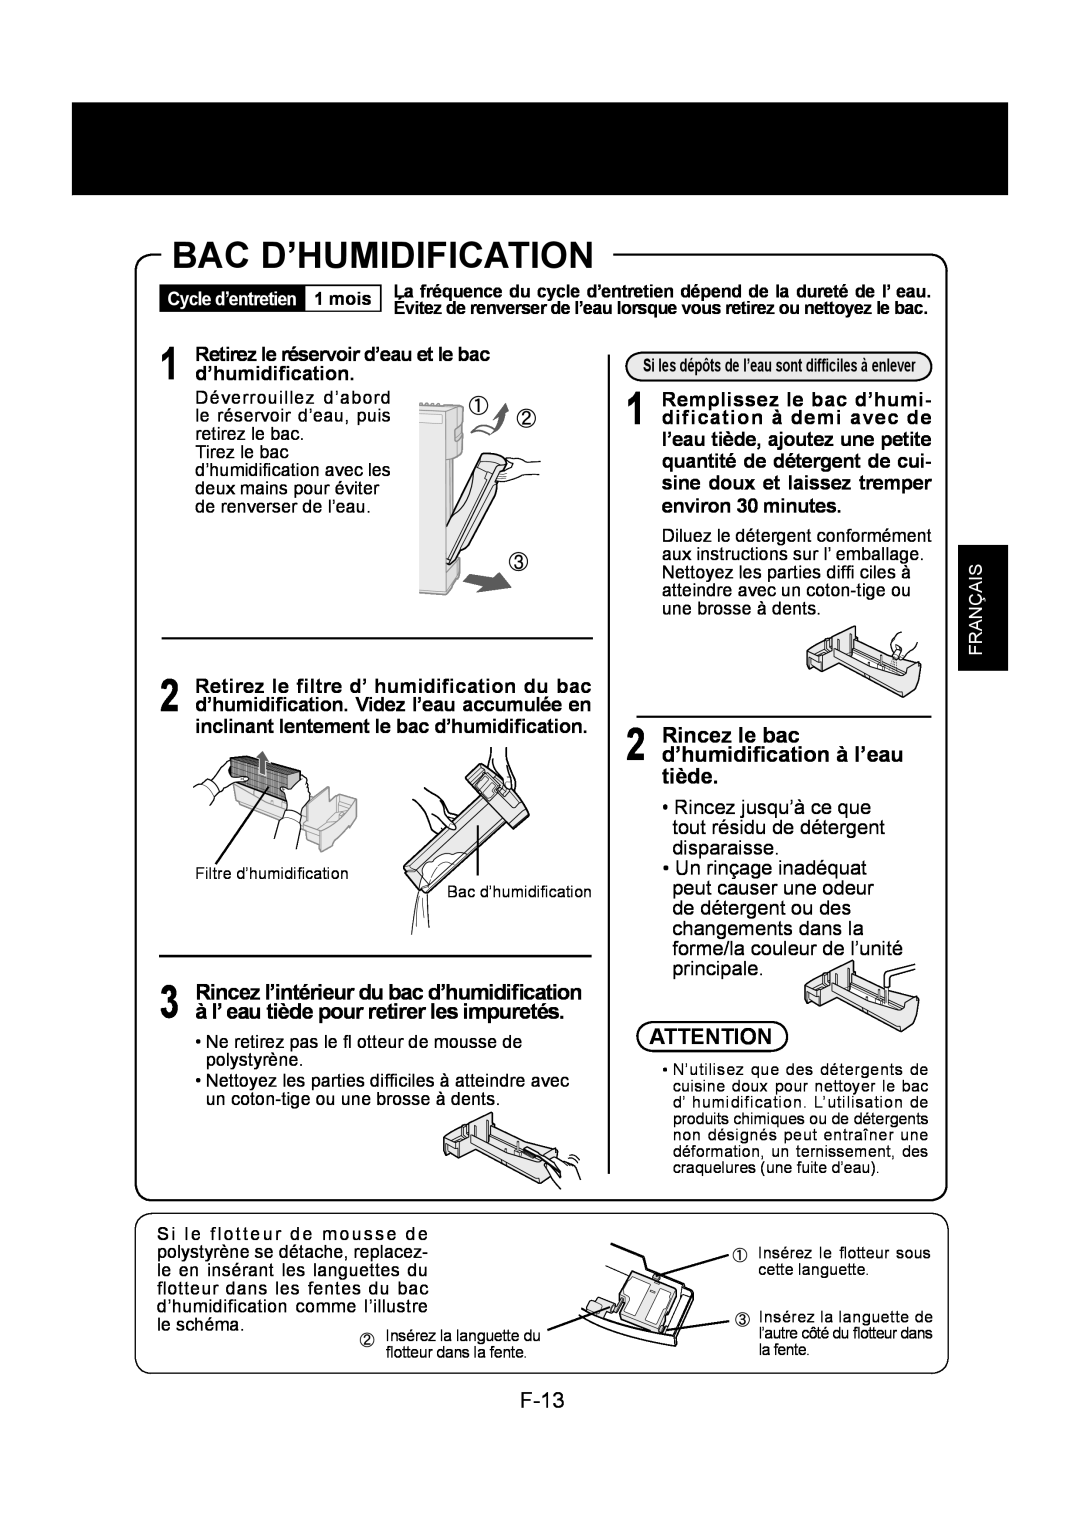 Sharp KC-830U operation manual Bac D’Humidification, F-13, Rincez le bac d’humidiﬁcation à l’eau tiède 